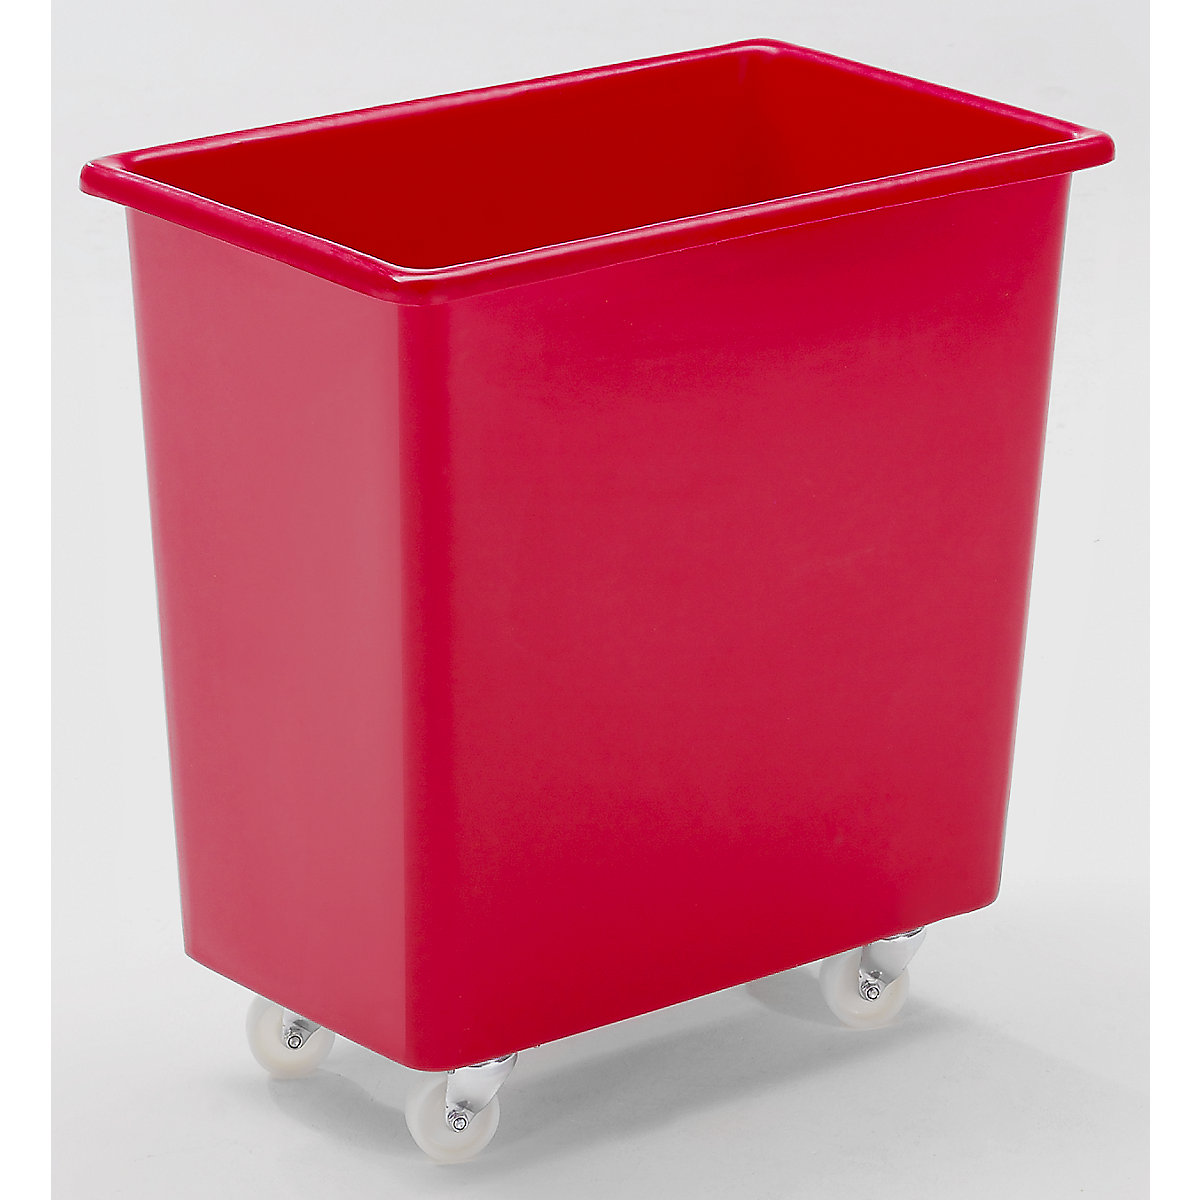 Rechteckbehälter aus Polyethylen, fahrbar, Inhalt 135 l, rot, ab 5 Stk